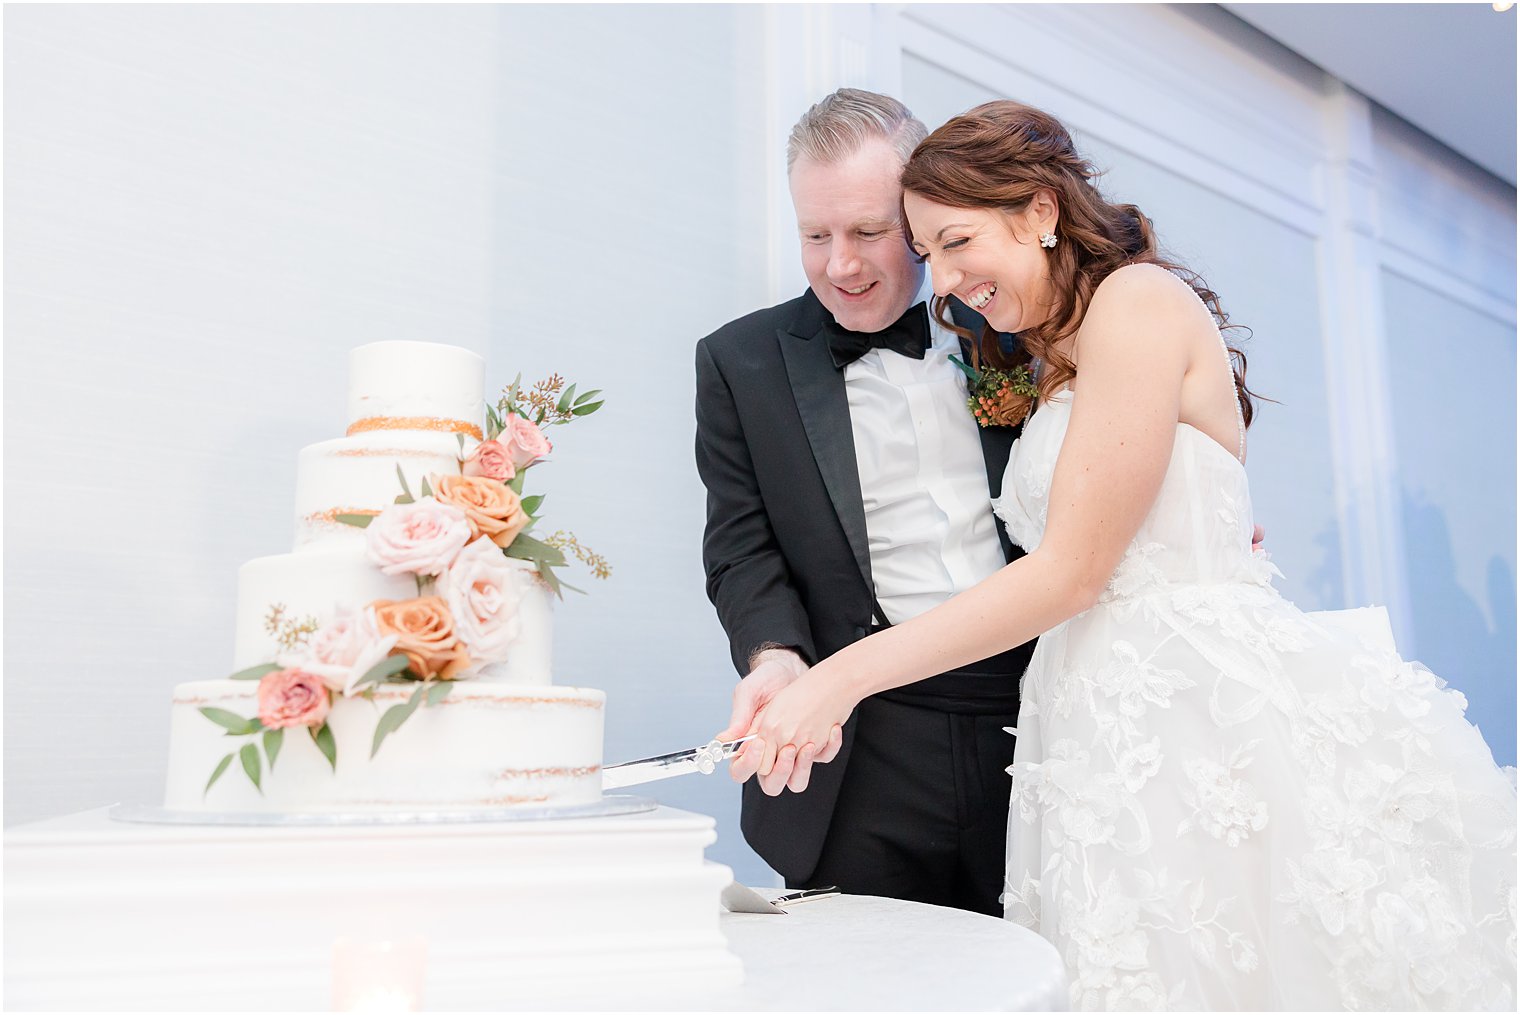 newlyweds cut wedding cake during NJ wedding reception 